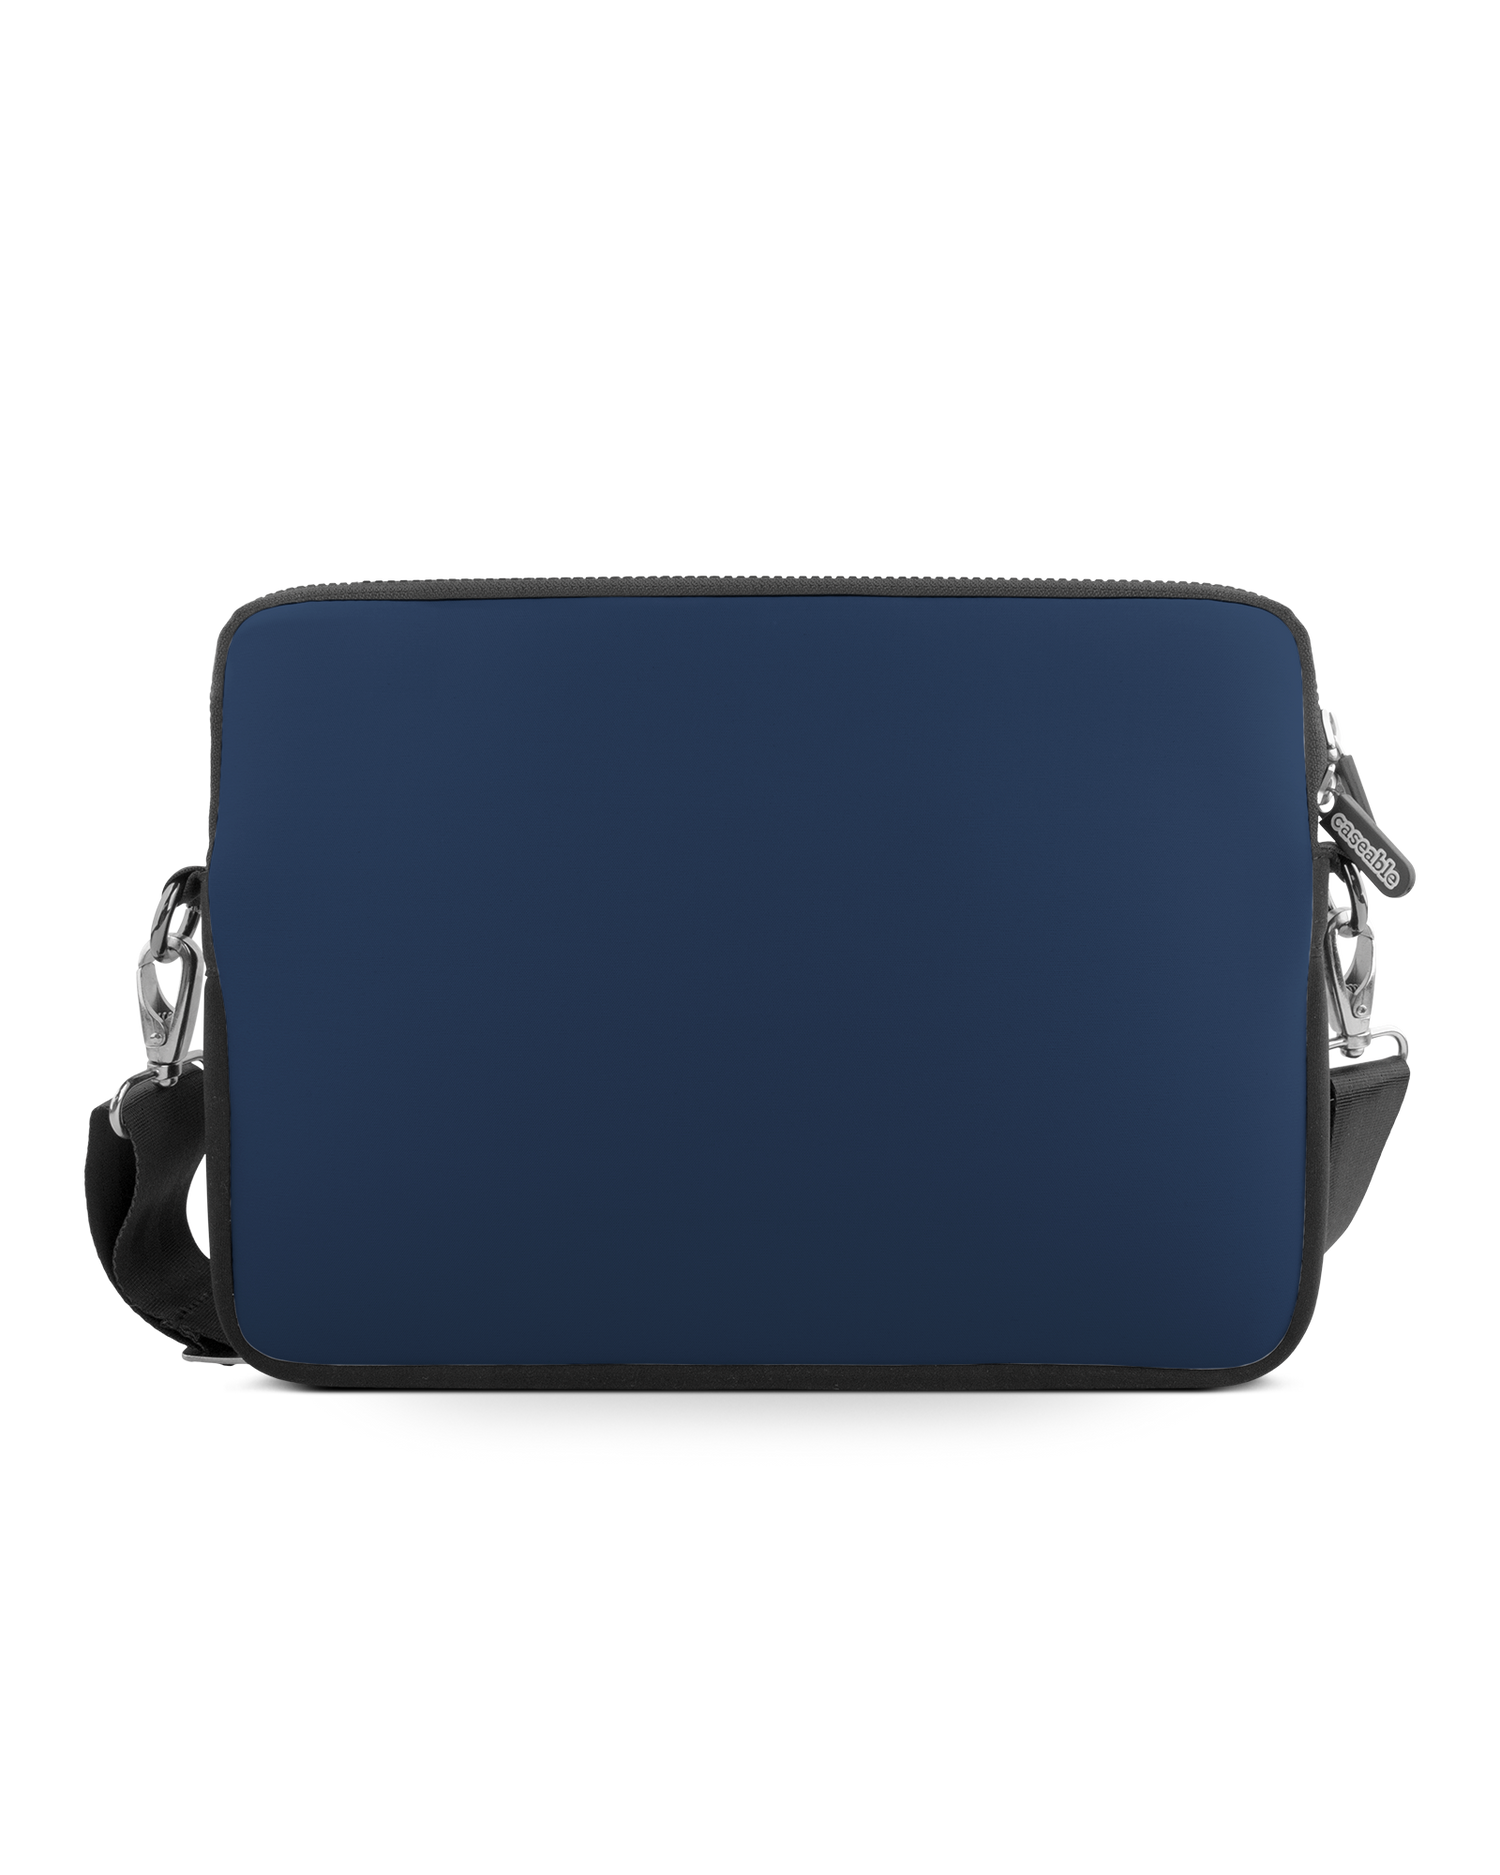 NAVY Premium Laptop Bag 13 inch: Front View